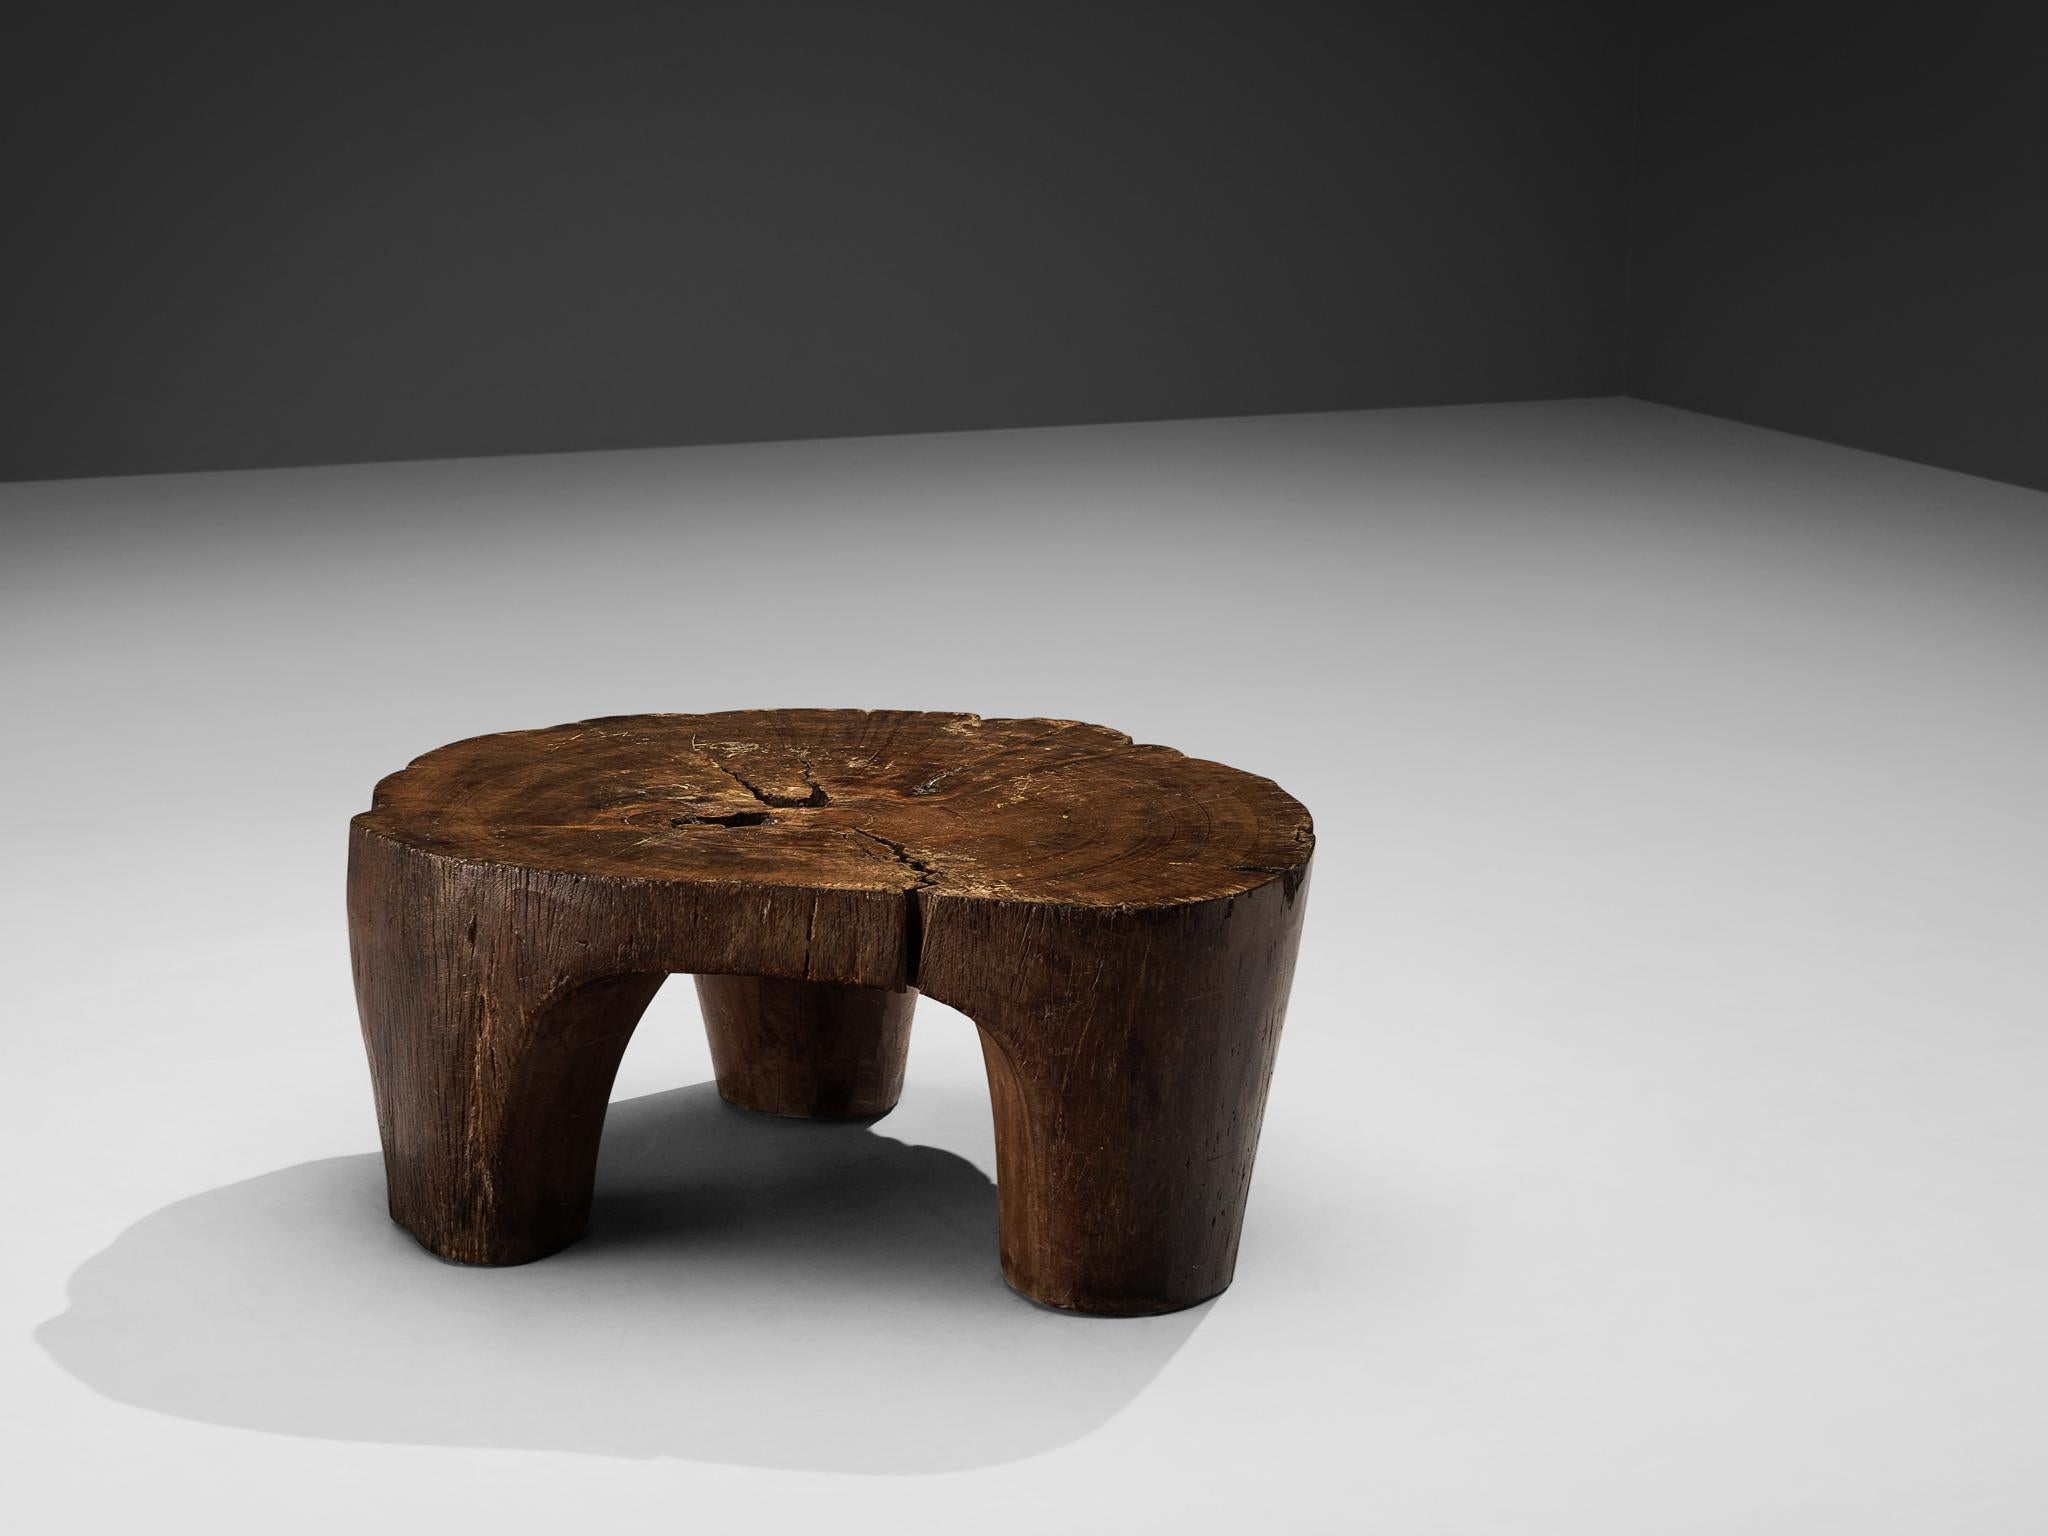 José Zanine Caldas Hand-Carved Coffee Table in Brazilian Hardwood